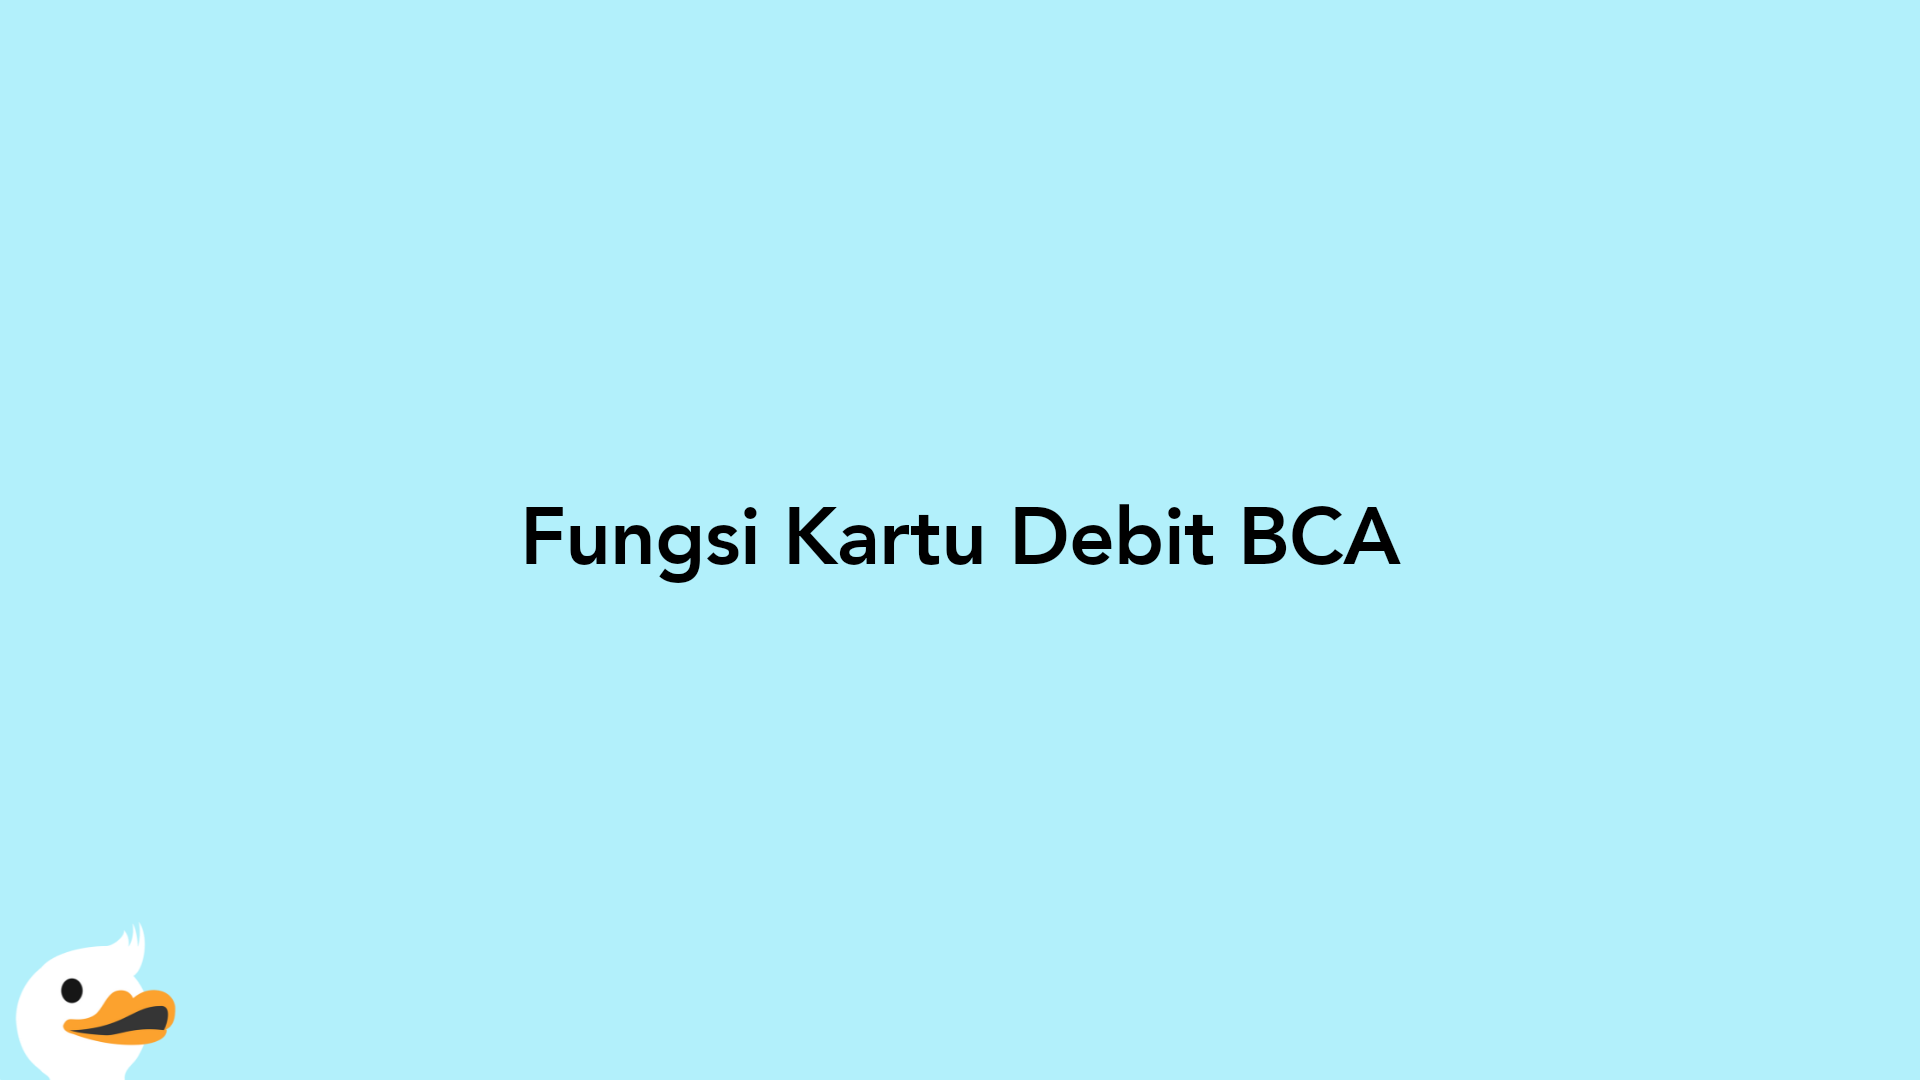 Fungsi Kartu Debit BCA